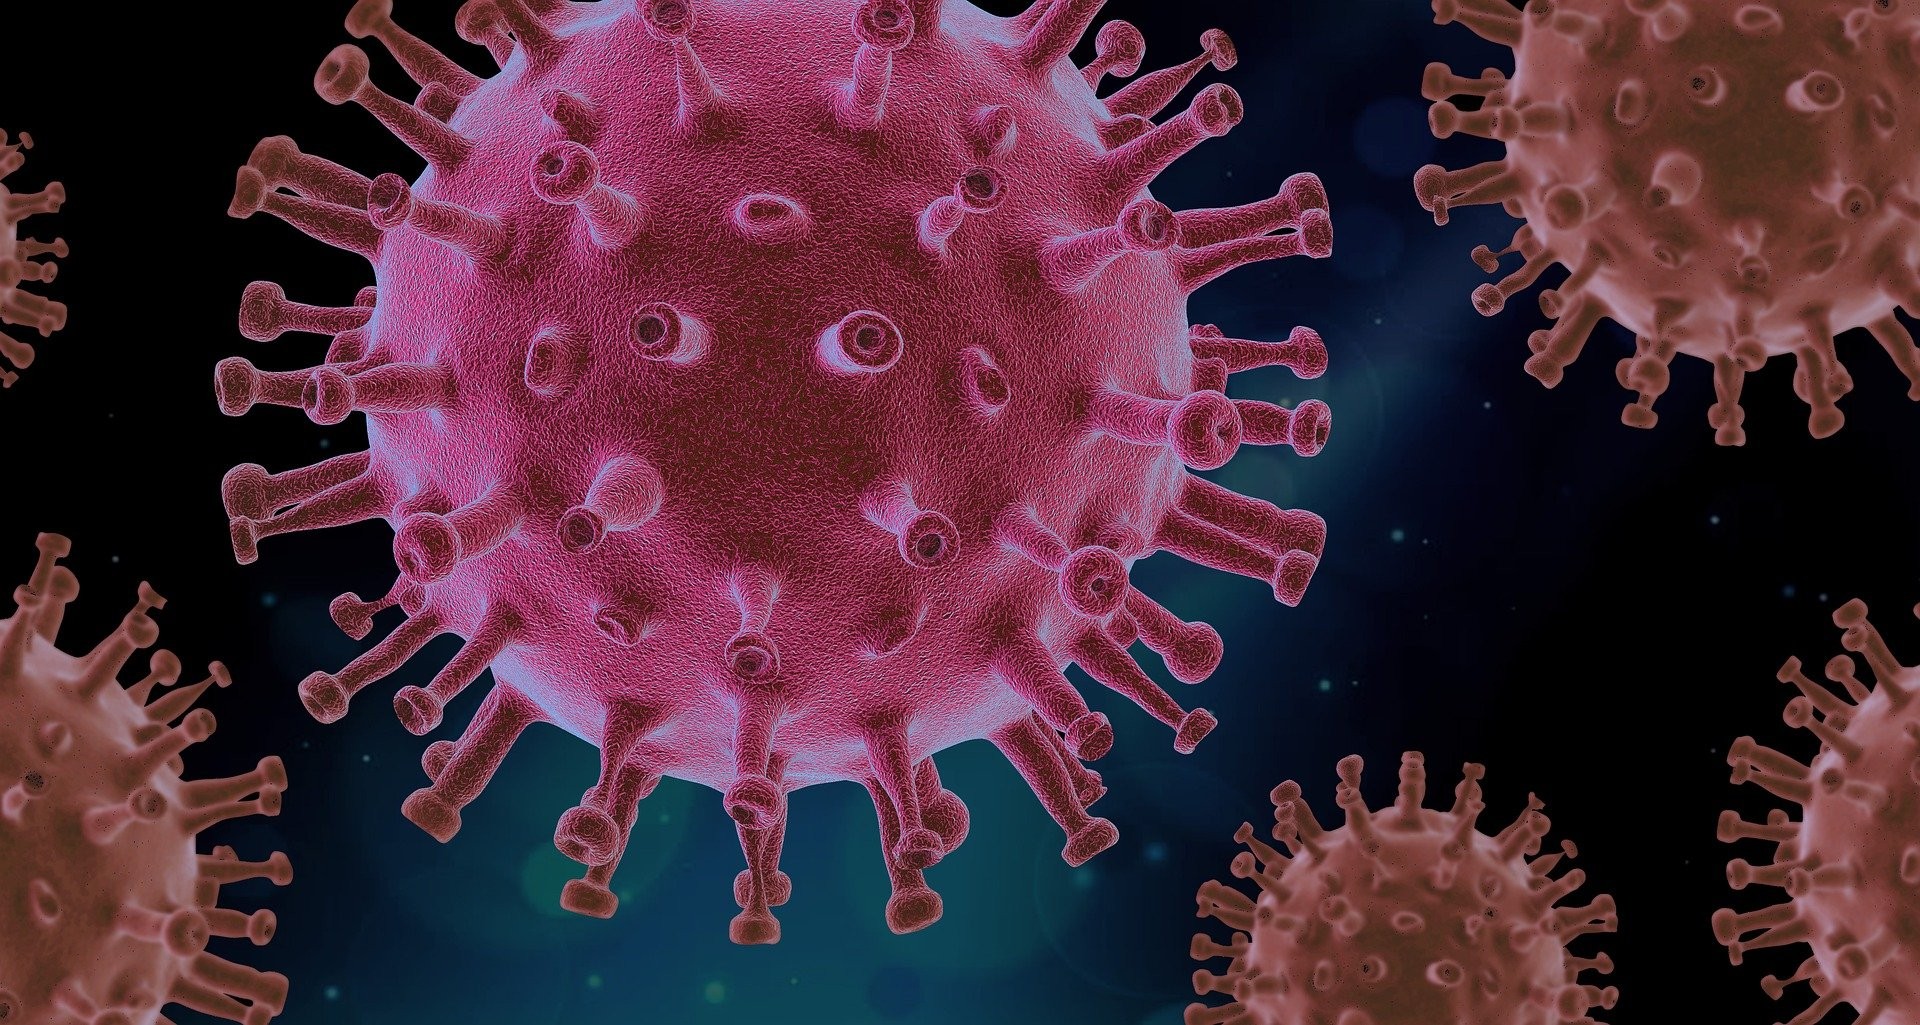 Imagem ilustrativa do vírus da COVID-19.  (Foto: pixabay)